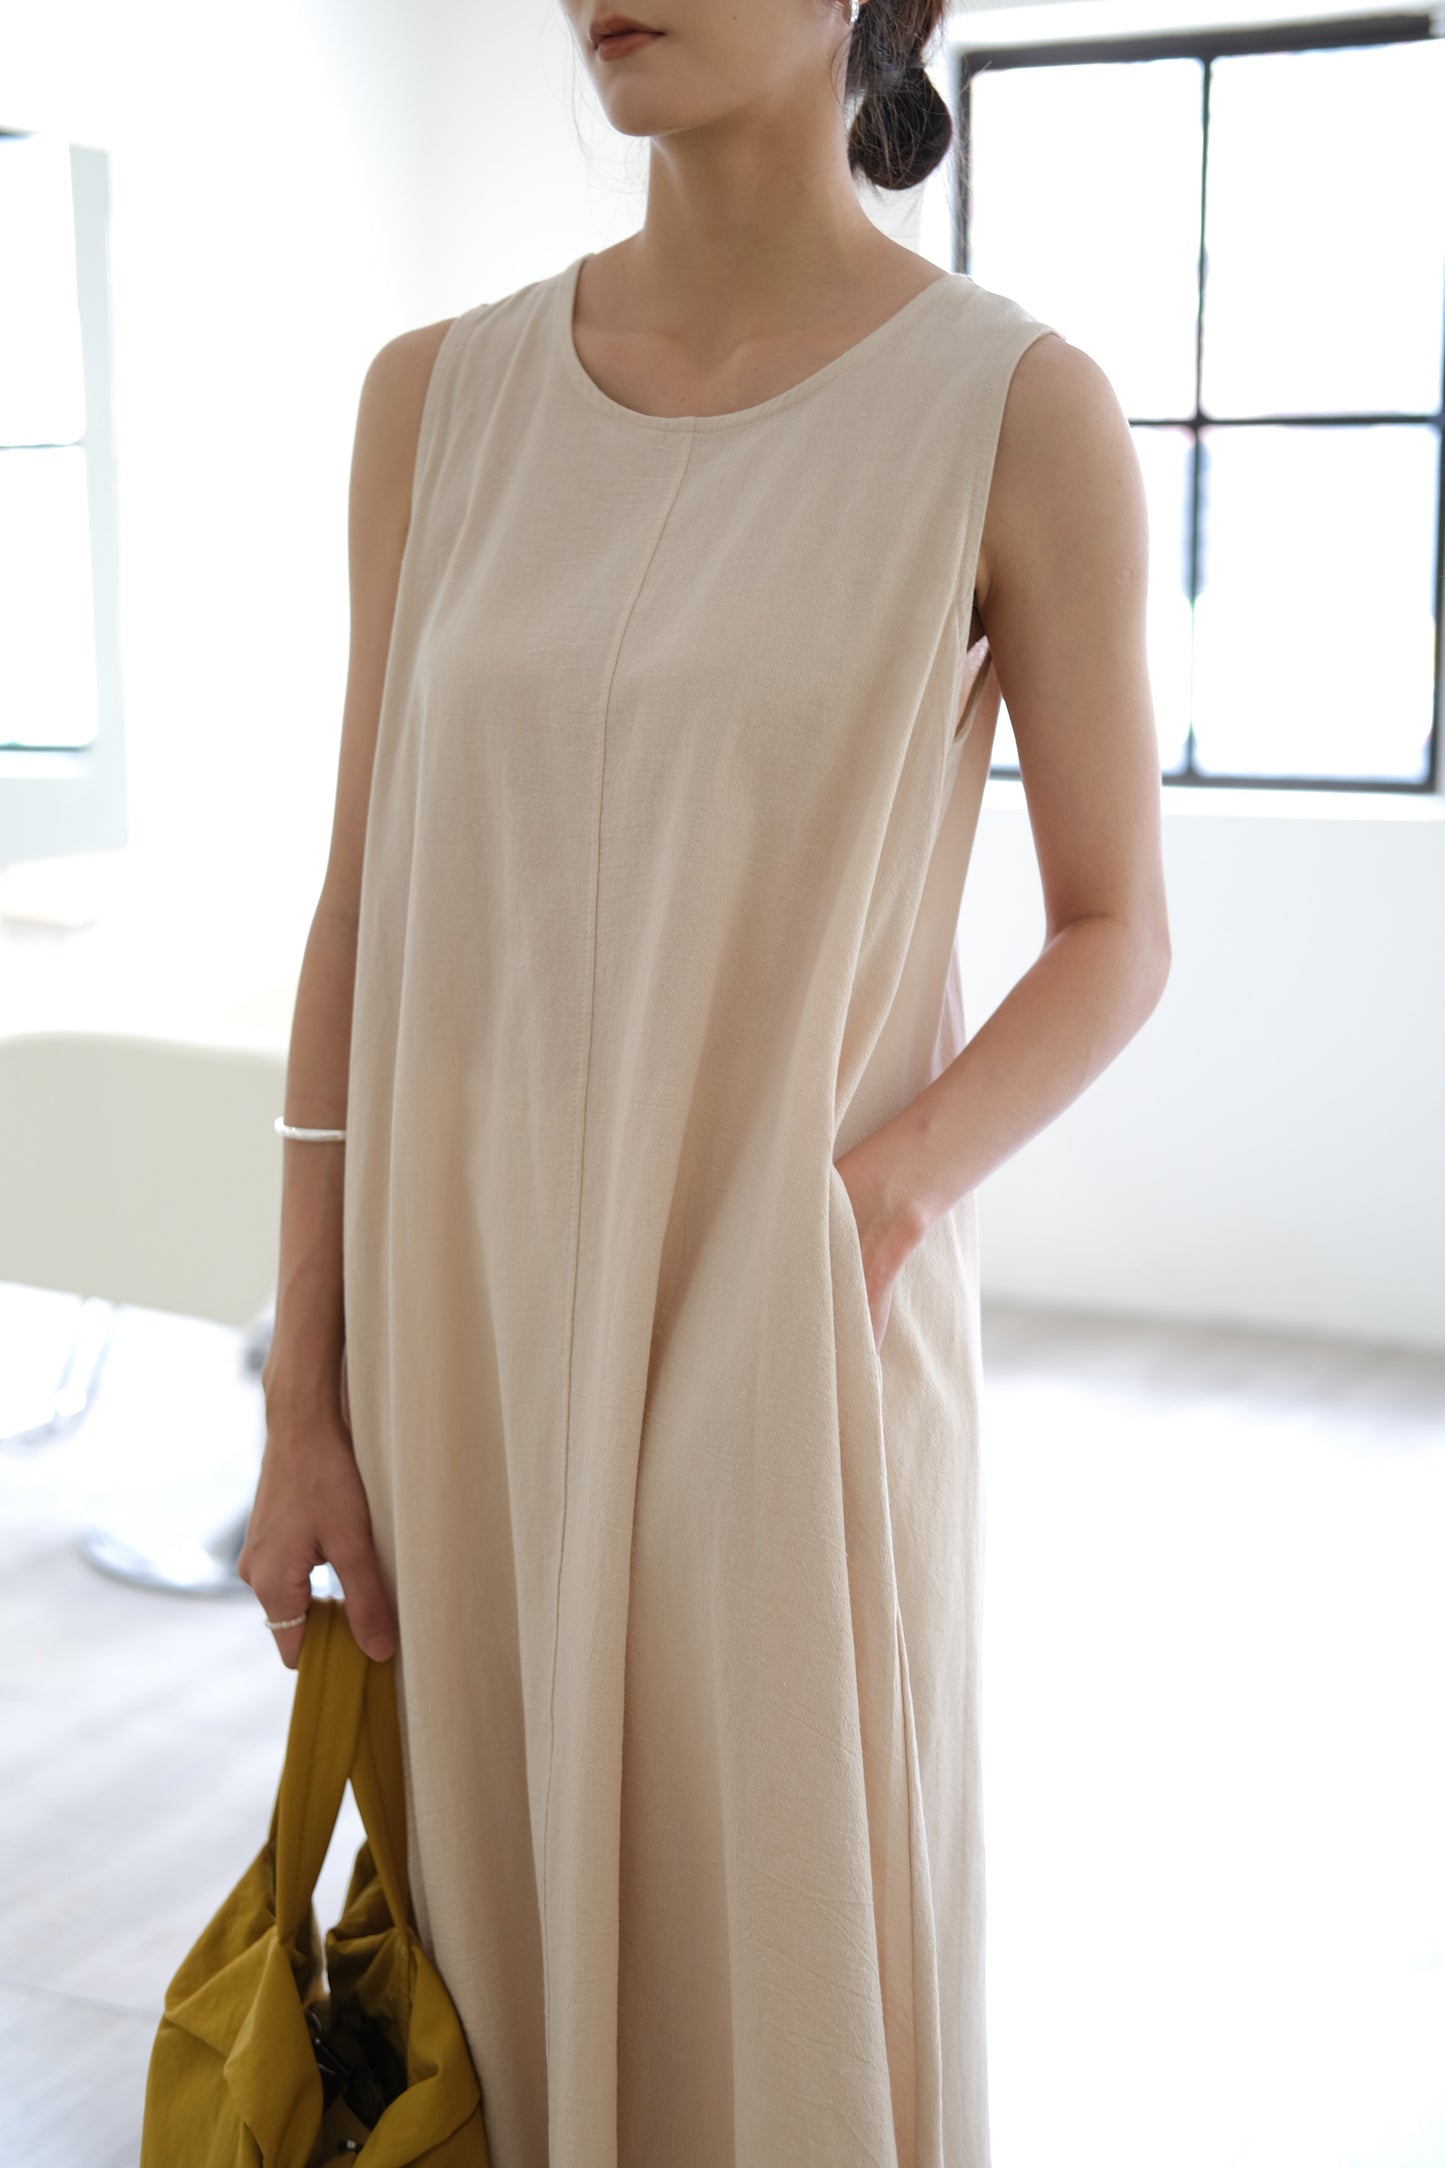 Sleeveless cotton and linen dress in khaki